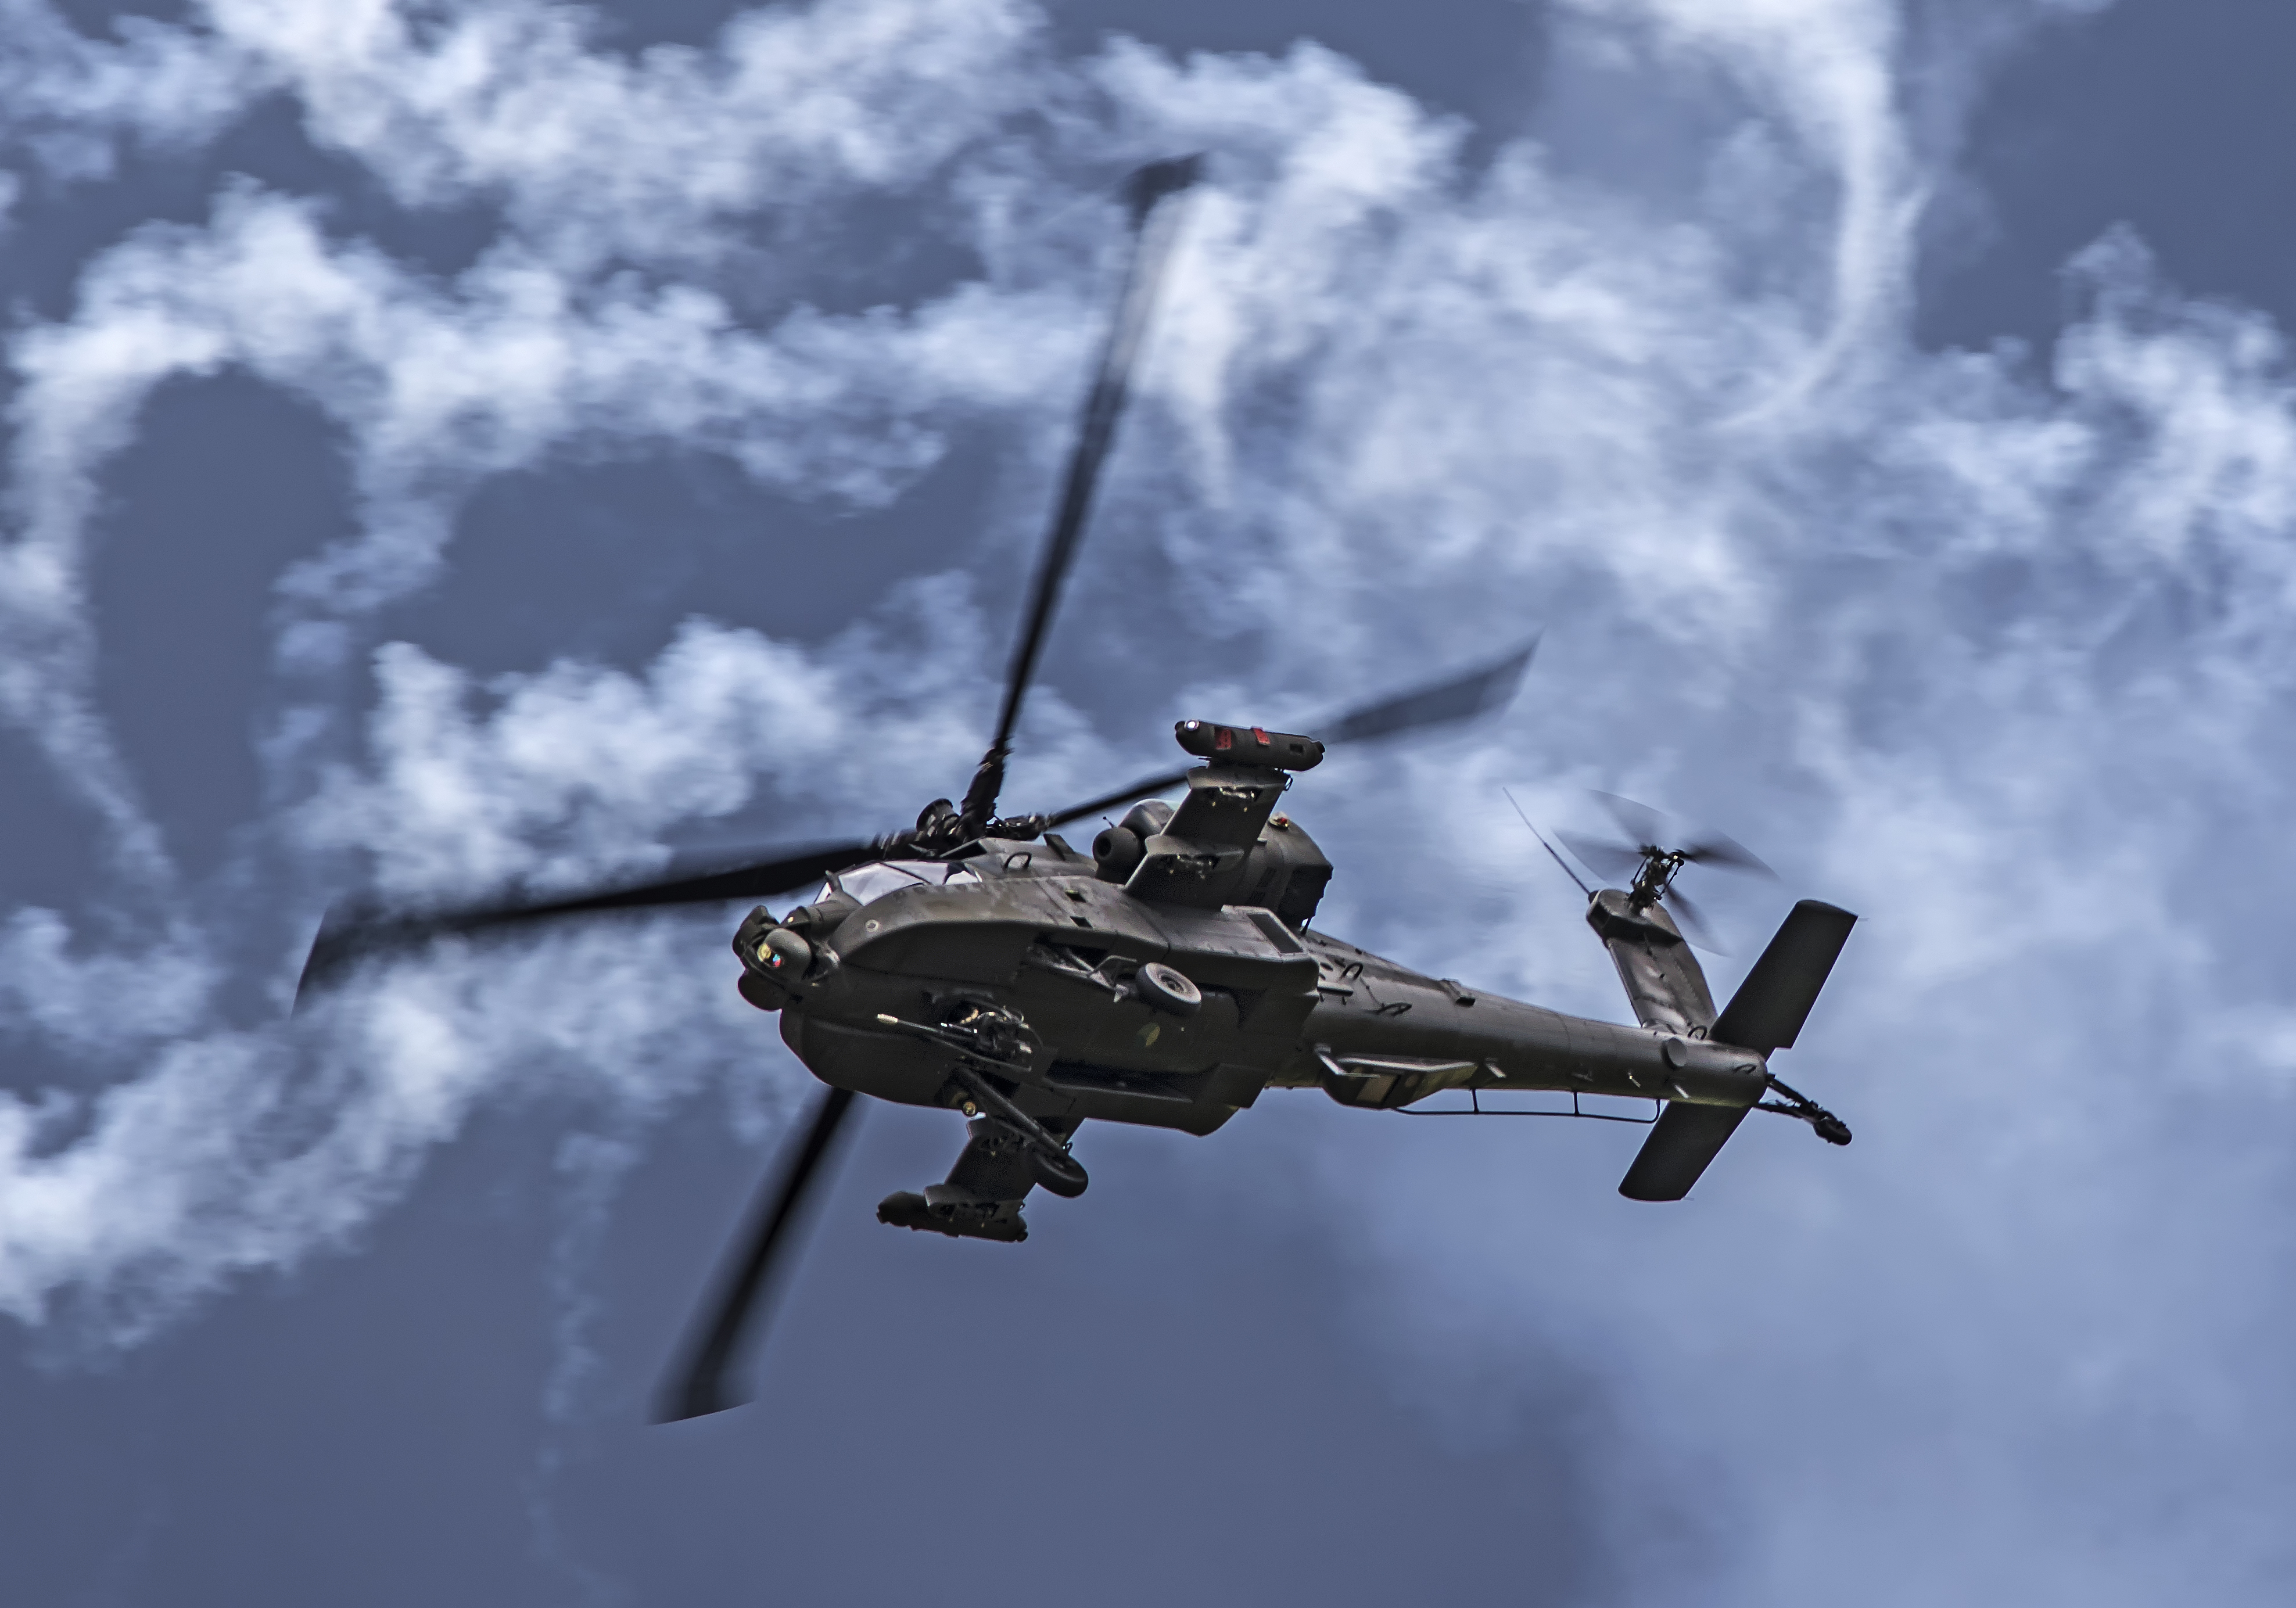 Baixe gratuitamente a imagem Helicóptero, Militar, Boeing Ah 64 Apache, Helicóptero De Ataque na área de trabalho do seu PC